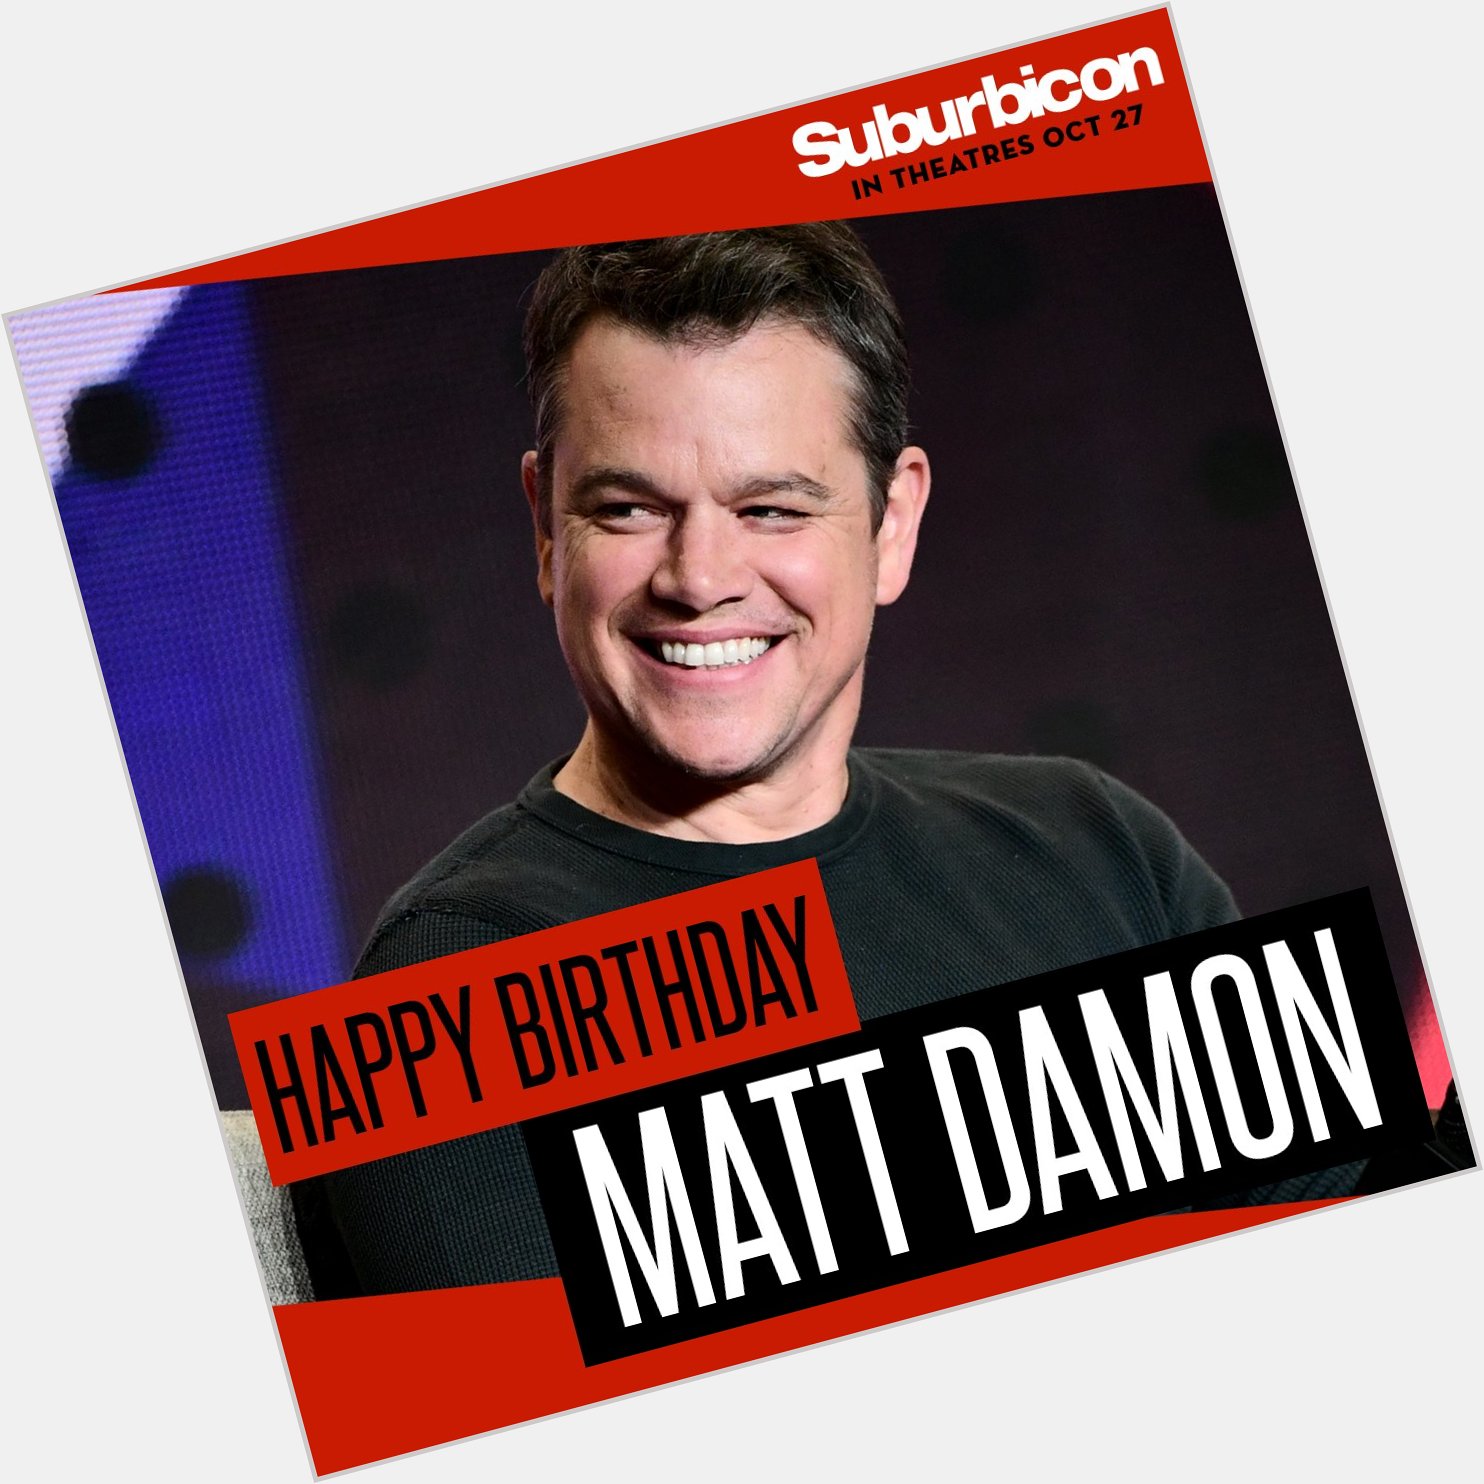 Happy birthday Matt Damon, from all your neighbors in 